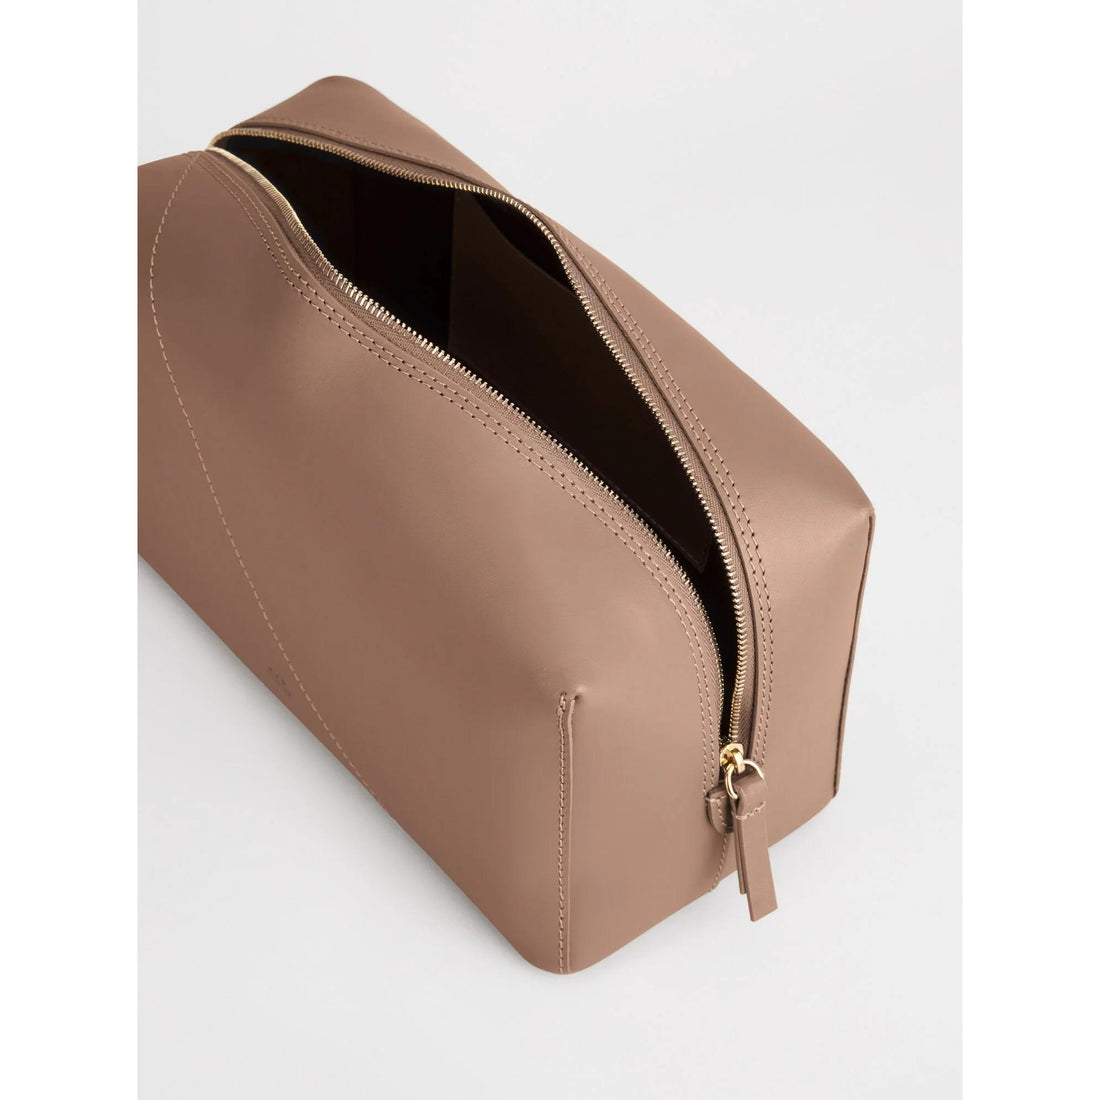 ATP Atelier Pomaia Hazelnut Leather Beauty Bag